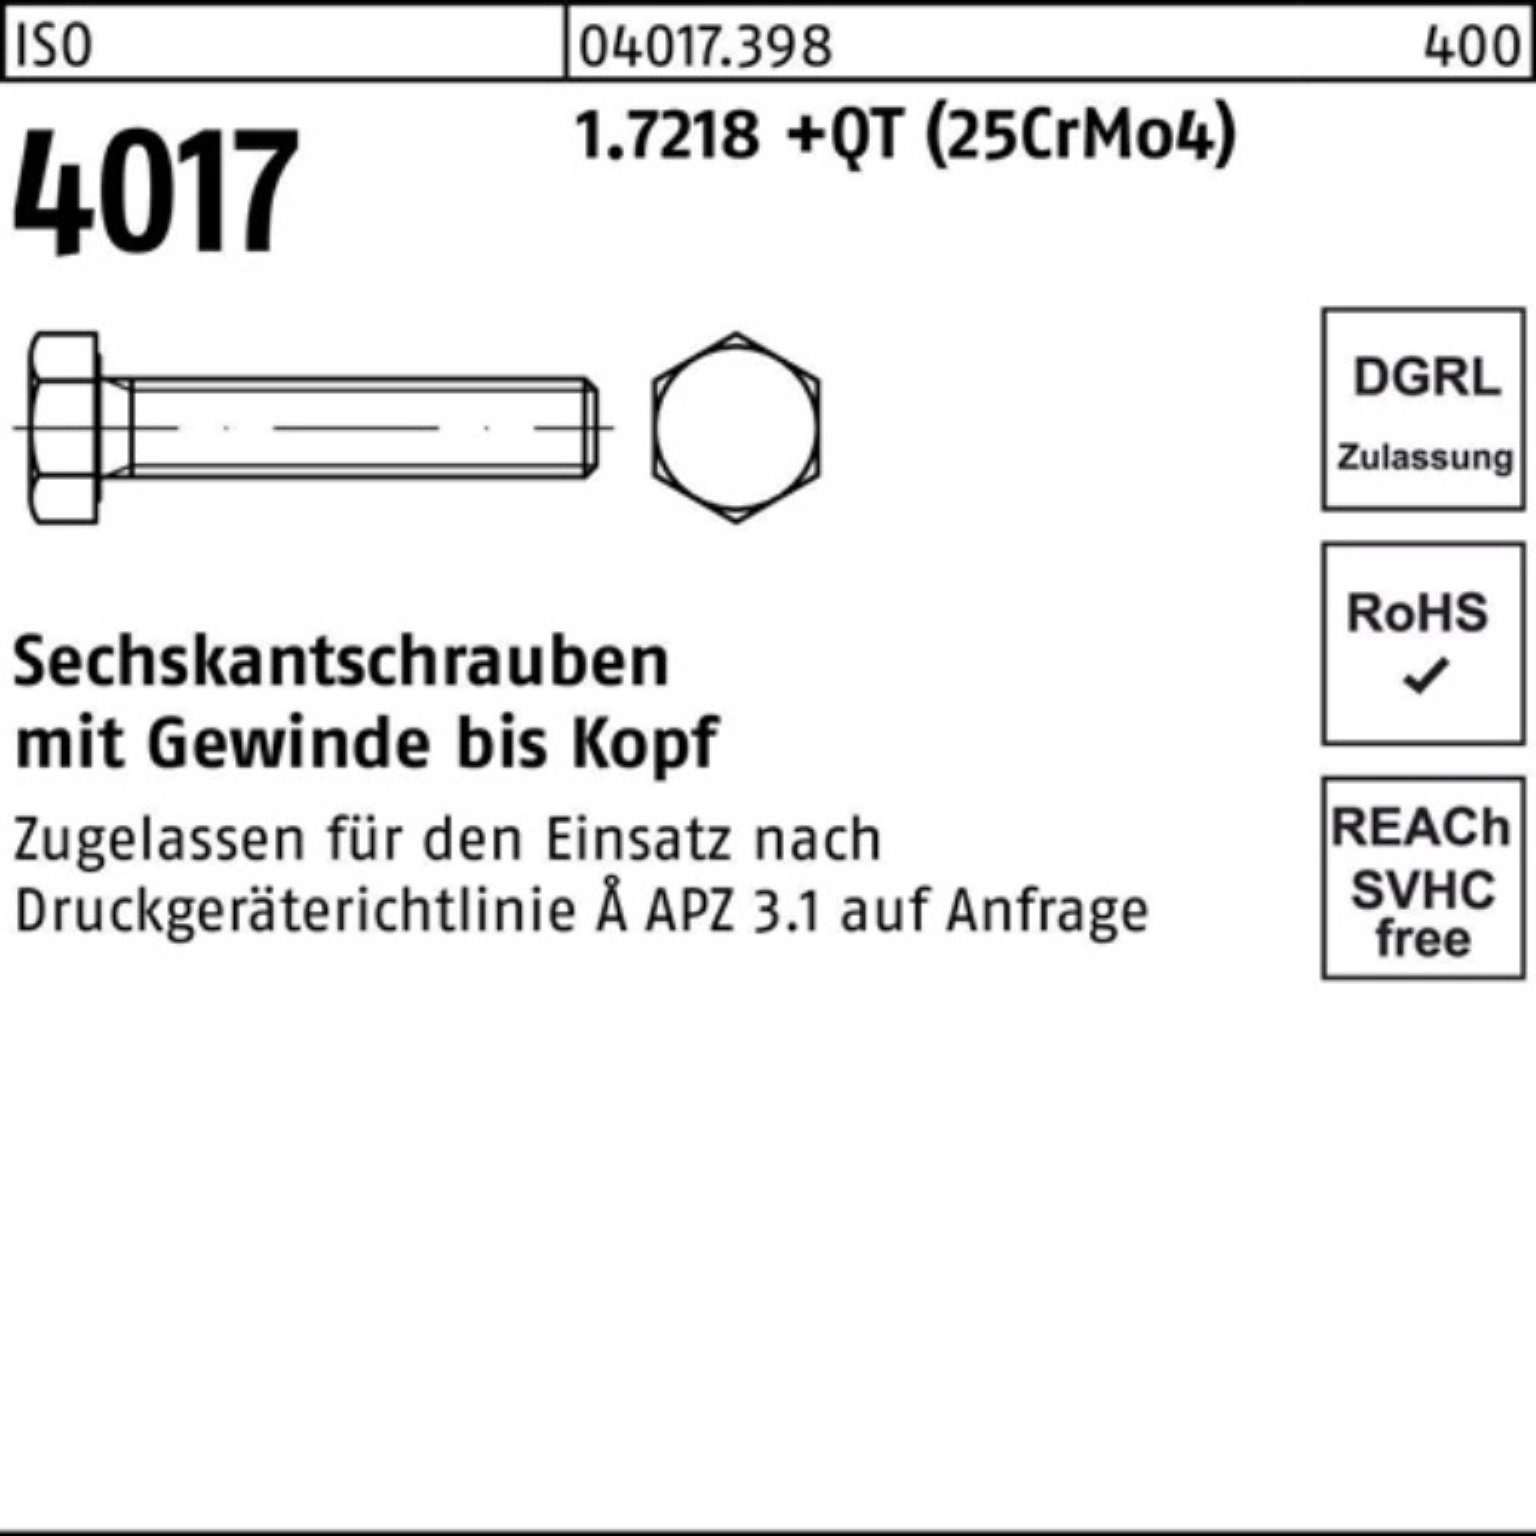 Pack 4017 +QT VG Sechskantschraube (25CrMo4) ISO Sechskantschraube 1.7218 120 M20x 100er Bufab